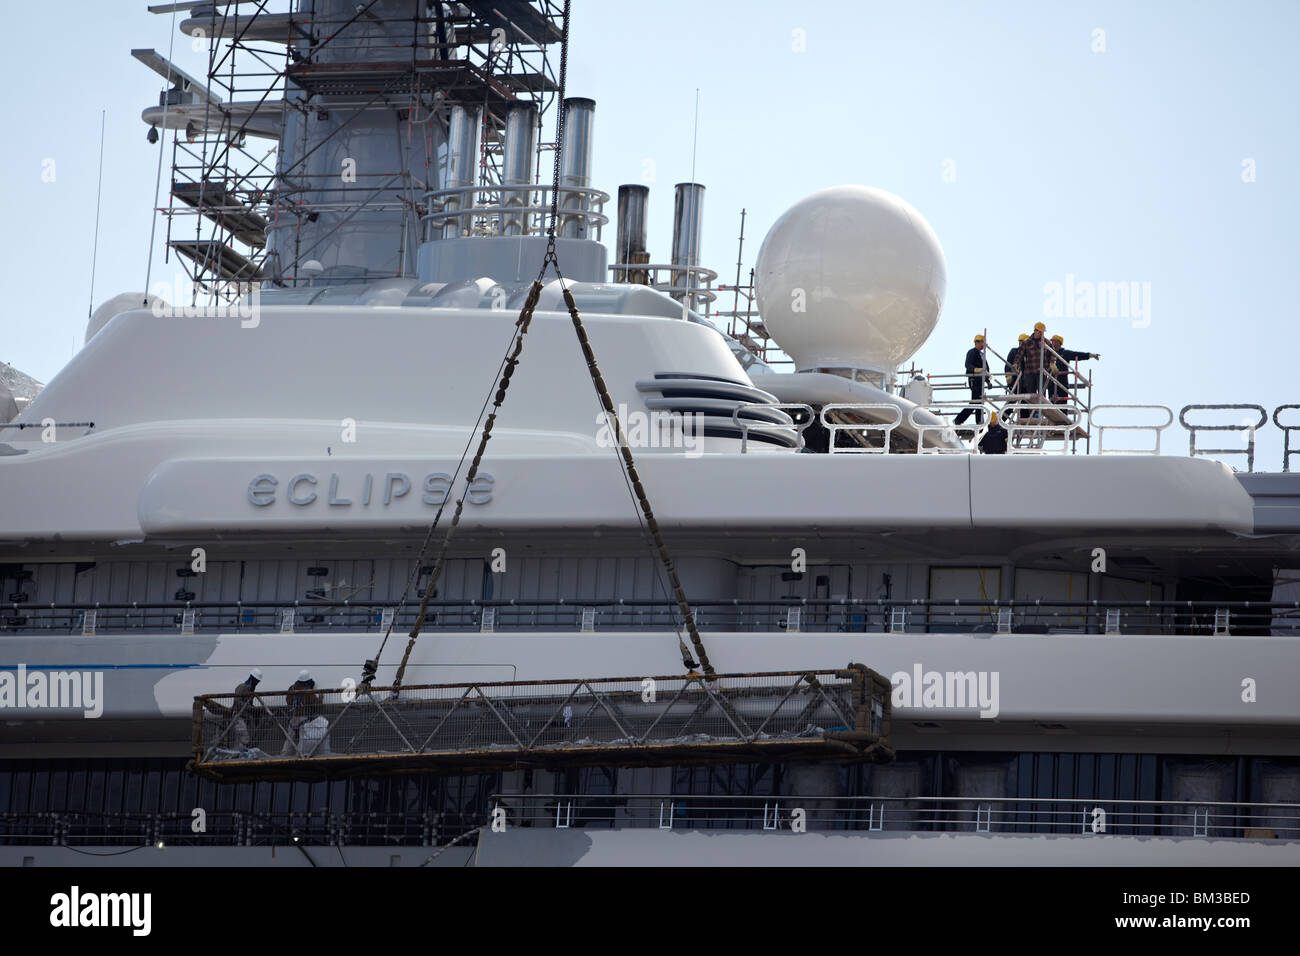 Roman Abramovich yacht Eclipse docked at Blohm + Voss ship yard. Stock Photo